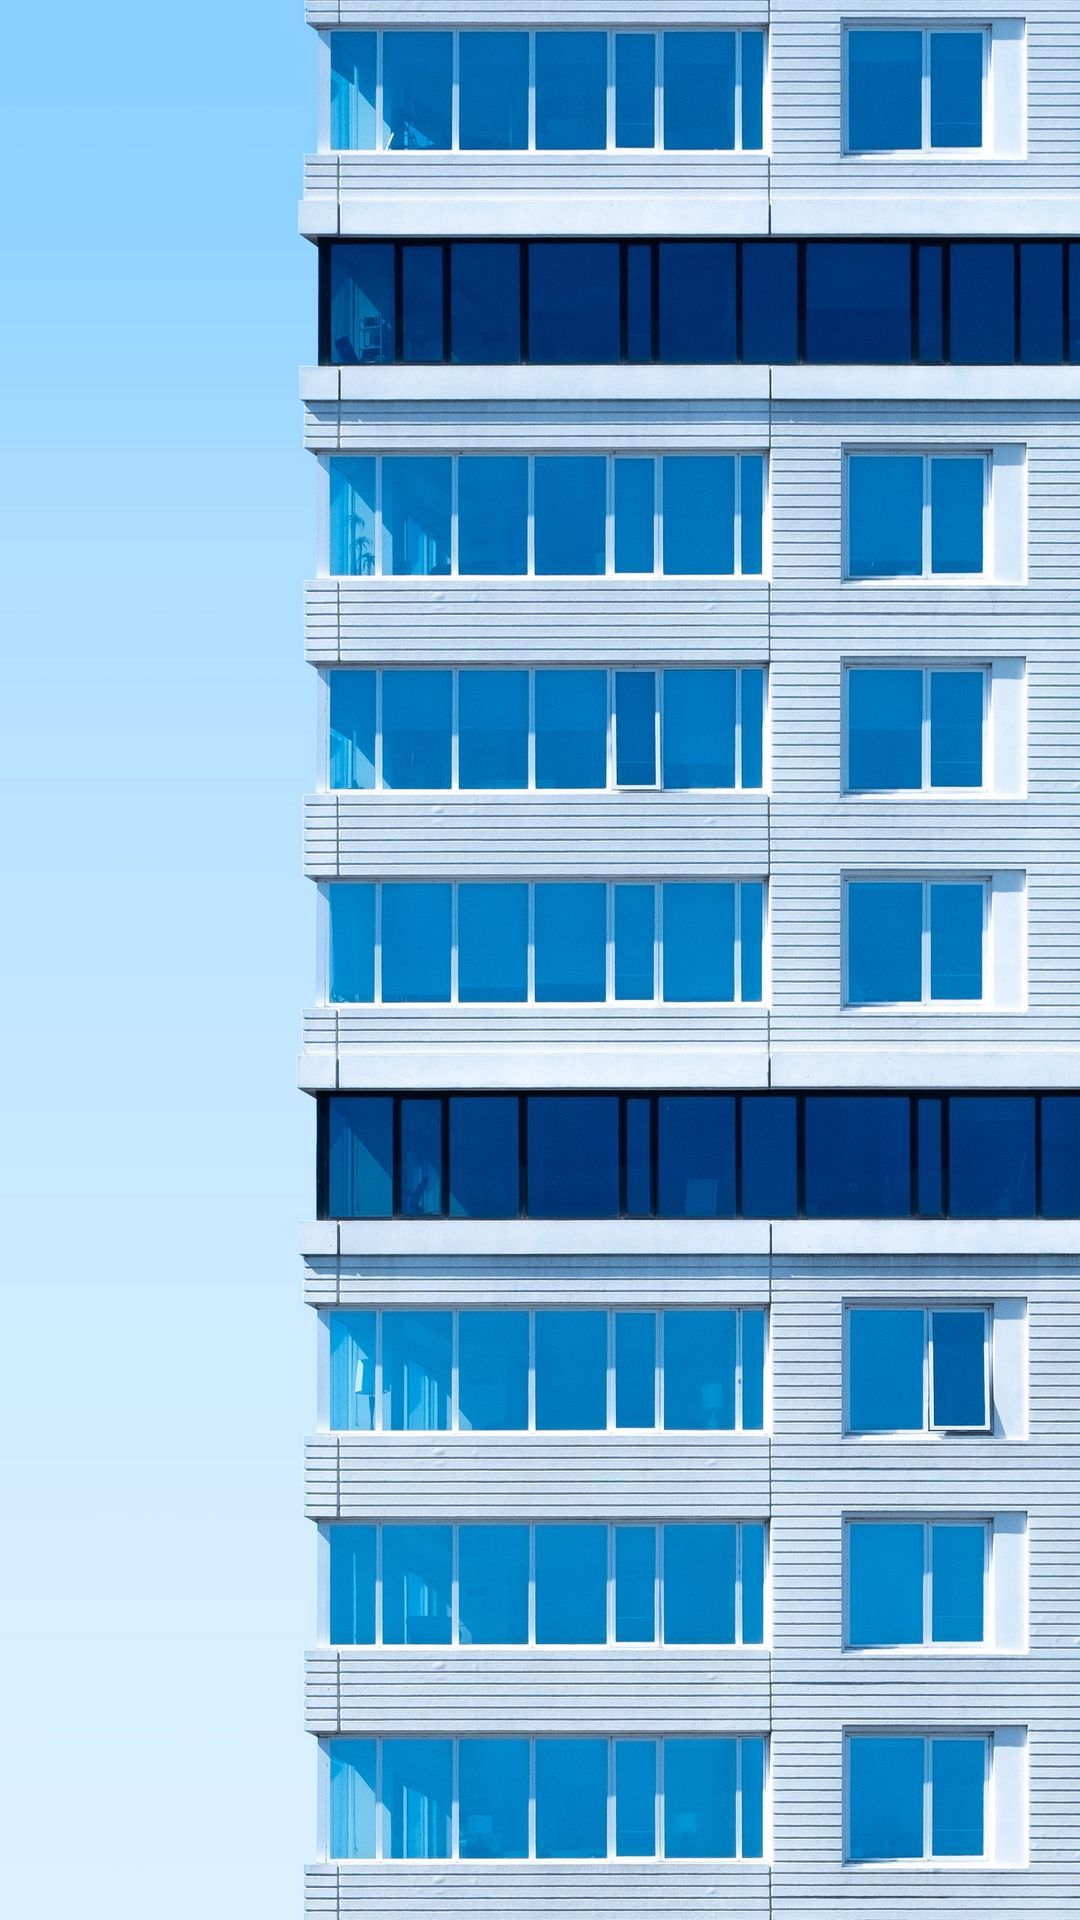 Download wallpaper 1080x1920 building, architecture, sky, minimalism, blue, aesthetic samsung galaxy s s note, sony xperia z, z z z htc one, lenovo vibe HD background